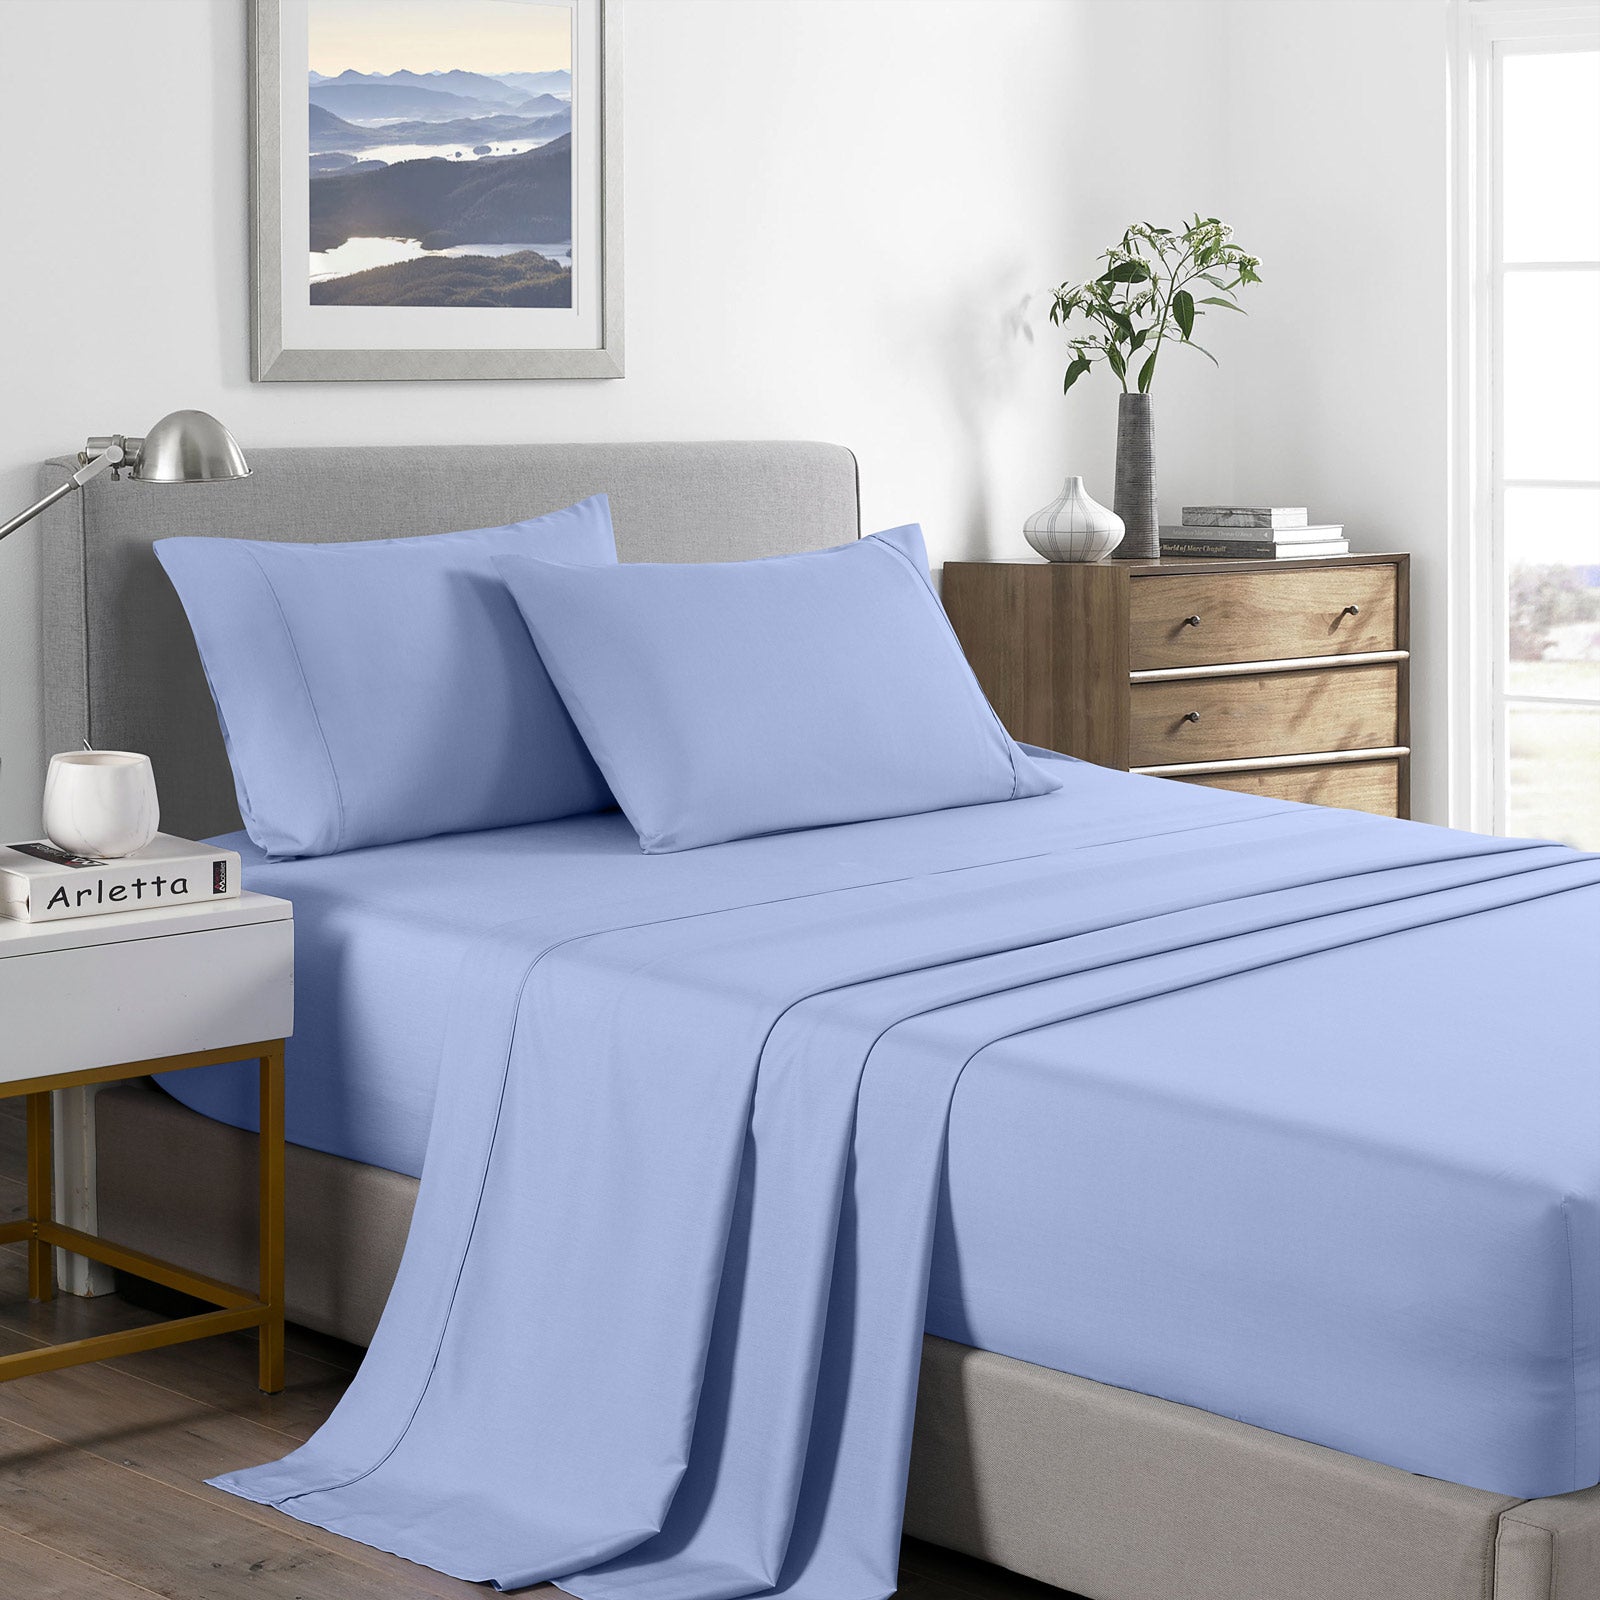 Royal Comfort 2000 Thread Count Bamboo Cooling Sheet Set Ultra Soft Bedding - King - Light Blue from Deals499 at Deals499